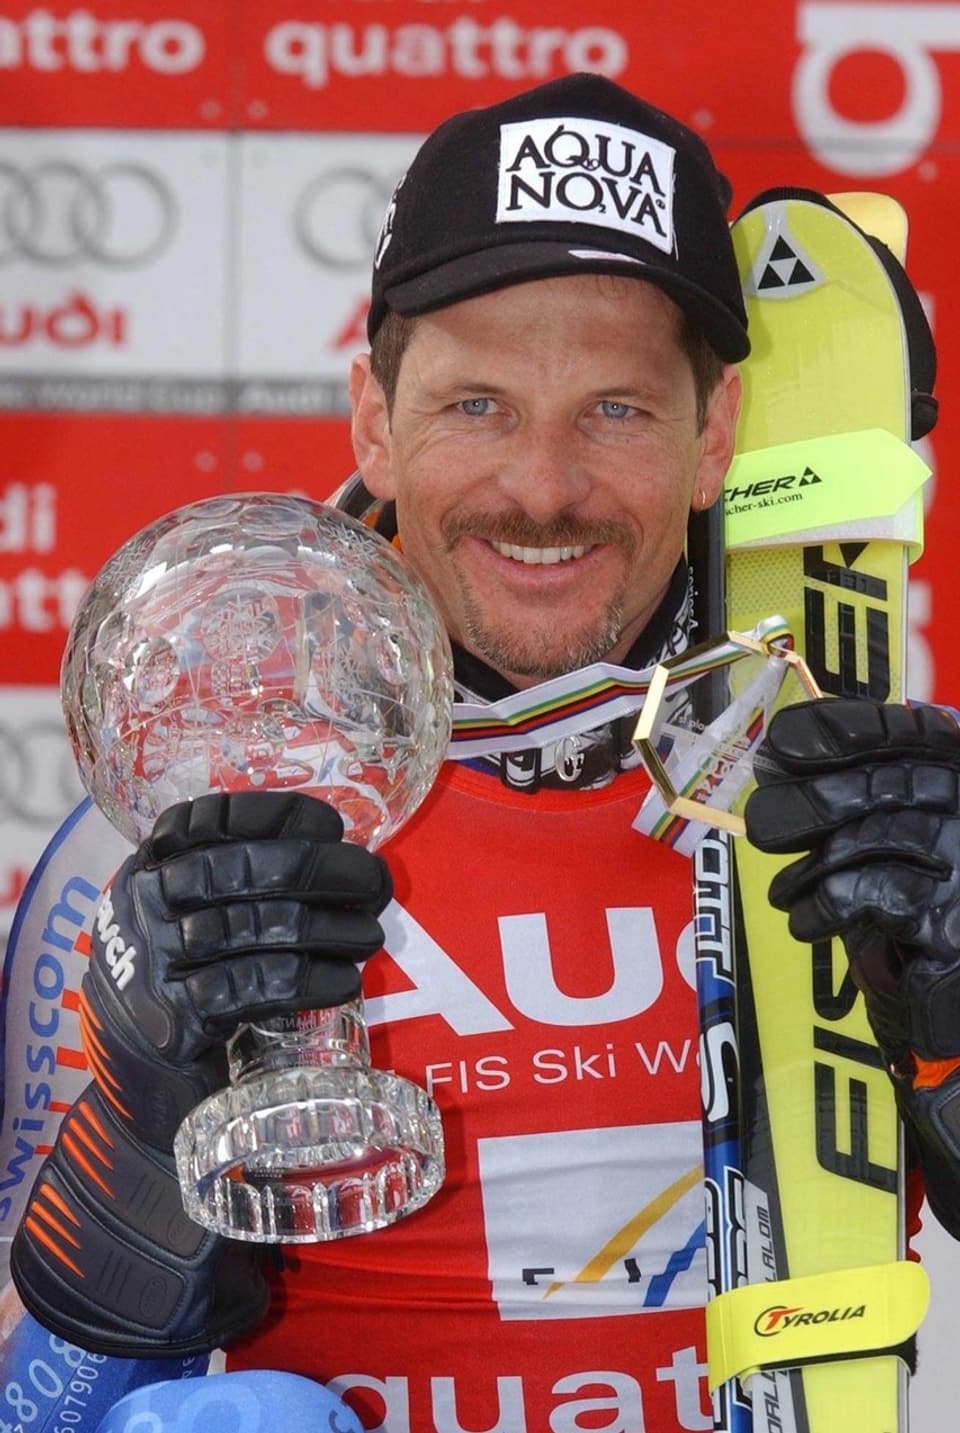 Man posing with skis and crystal ball